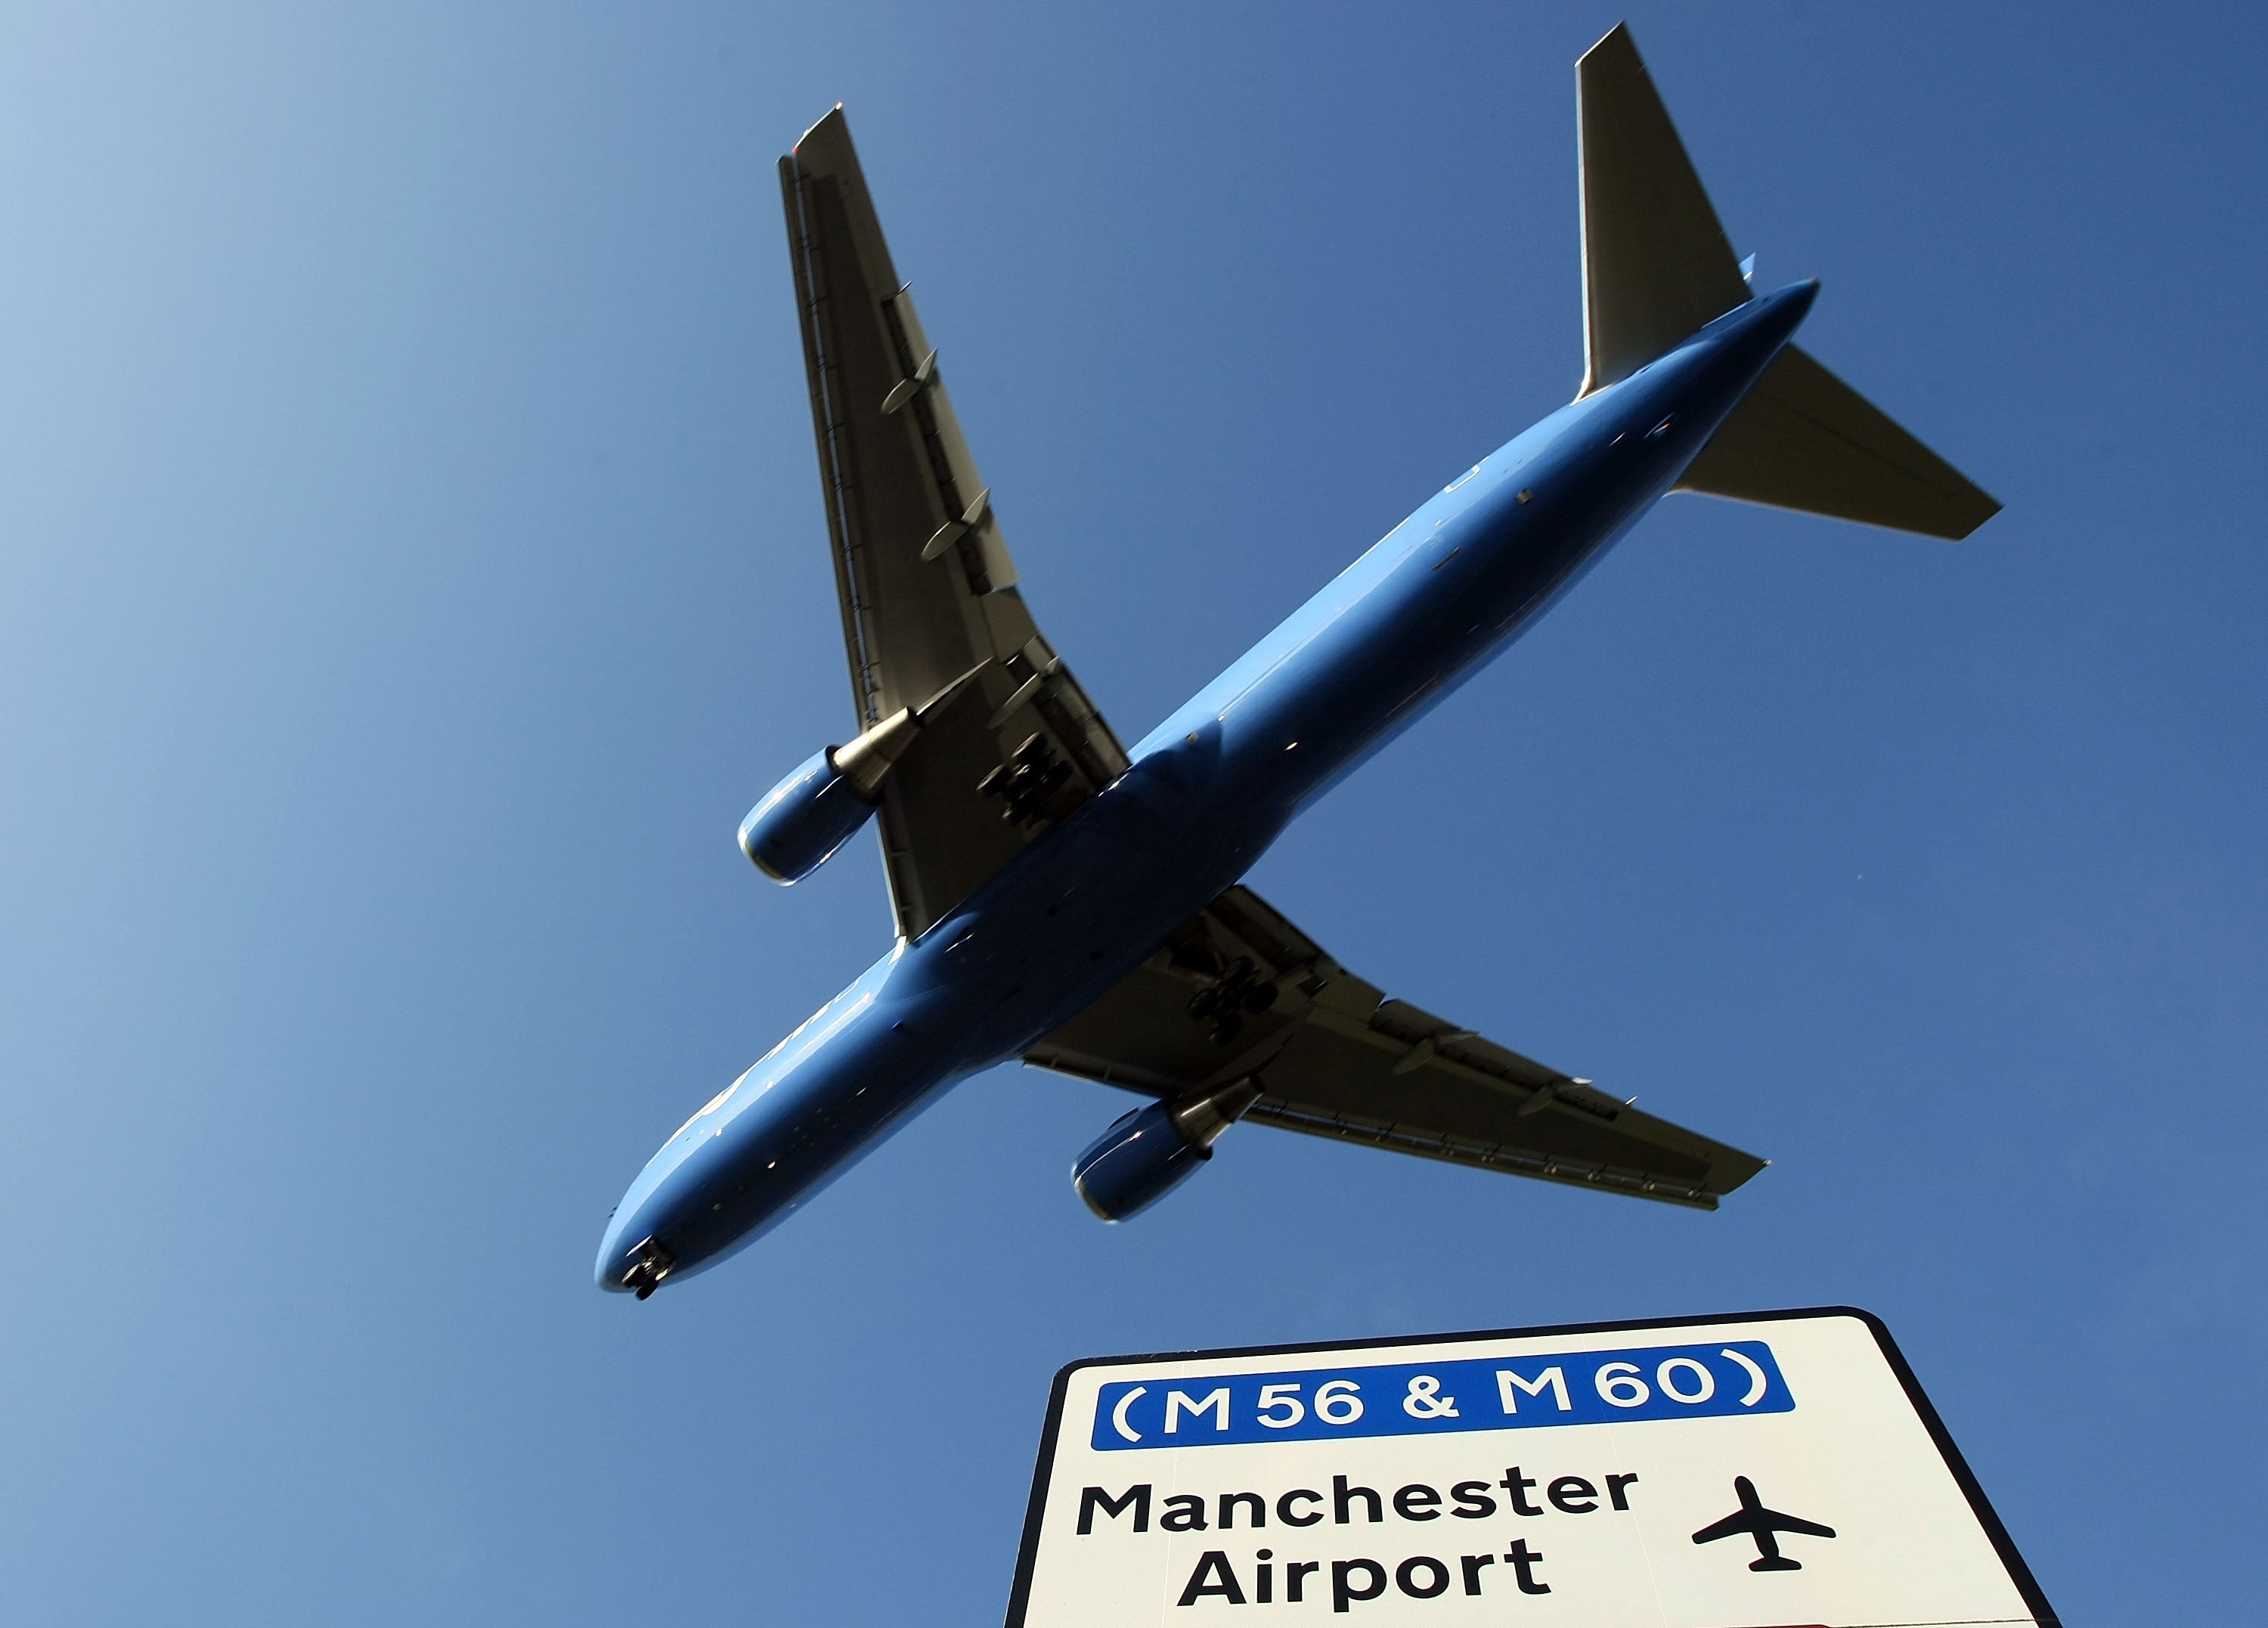 A passenger aircraft landing at Manchester International Airport (stock image)